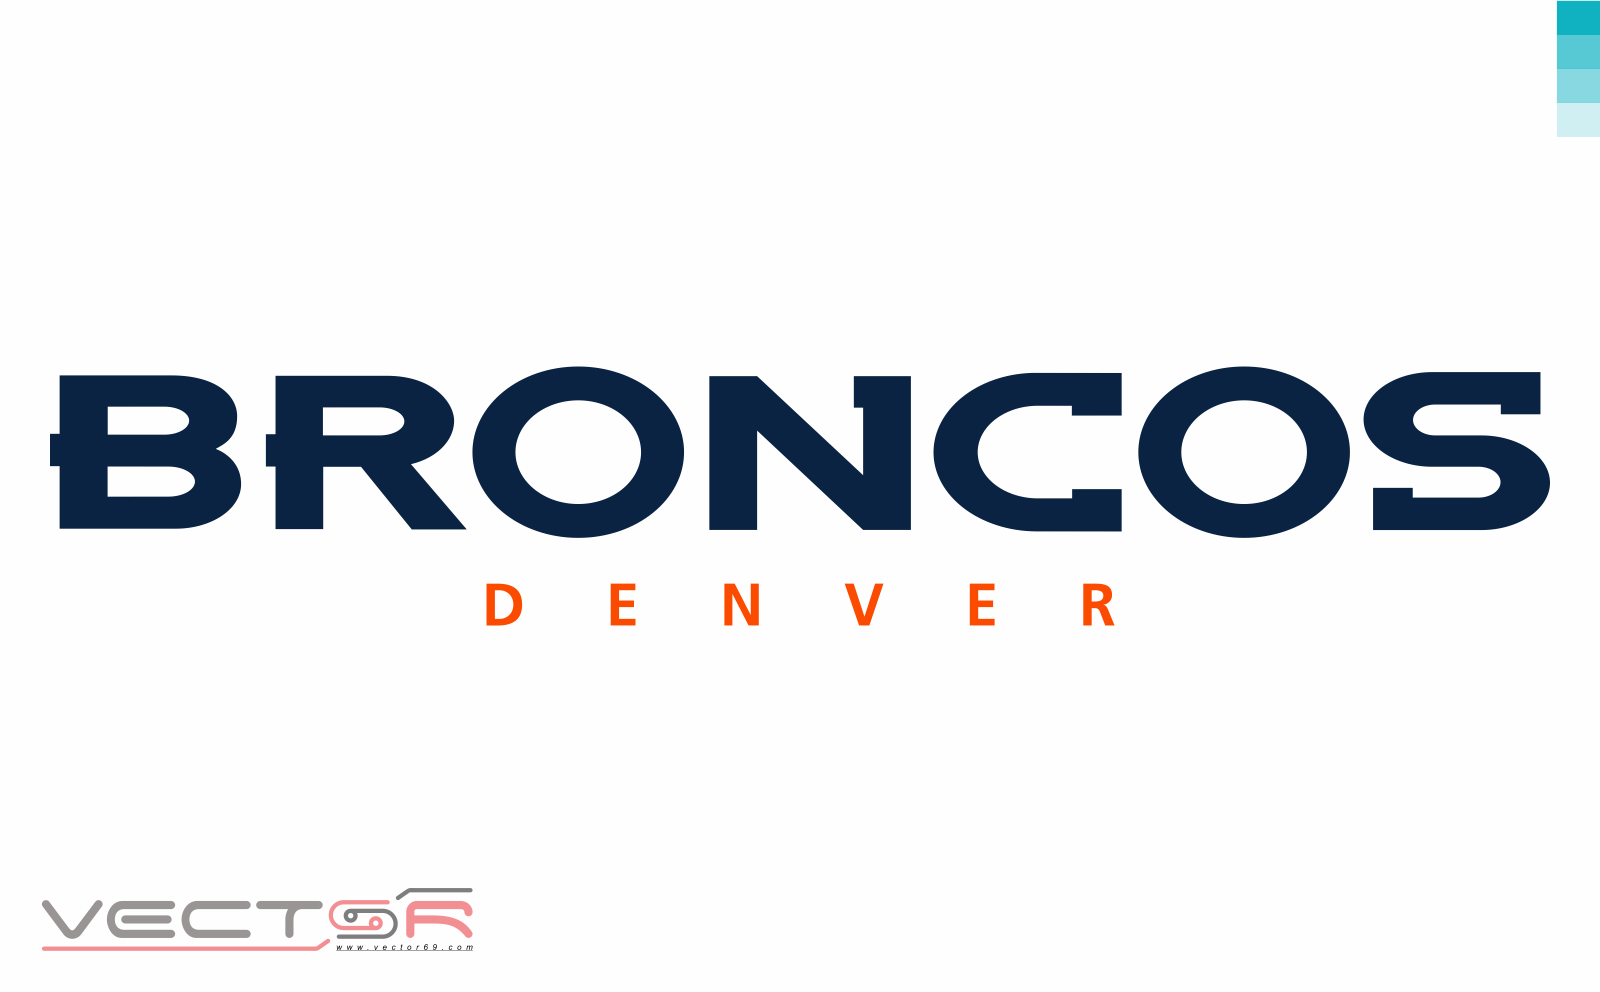 Denver Broncos Wordmark - Download Vector File SVG (Scalable Vector Graphics)